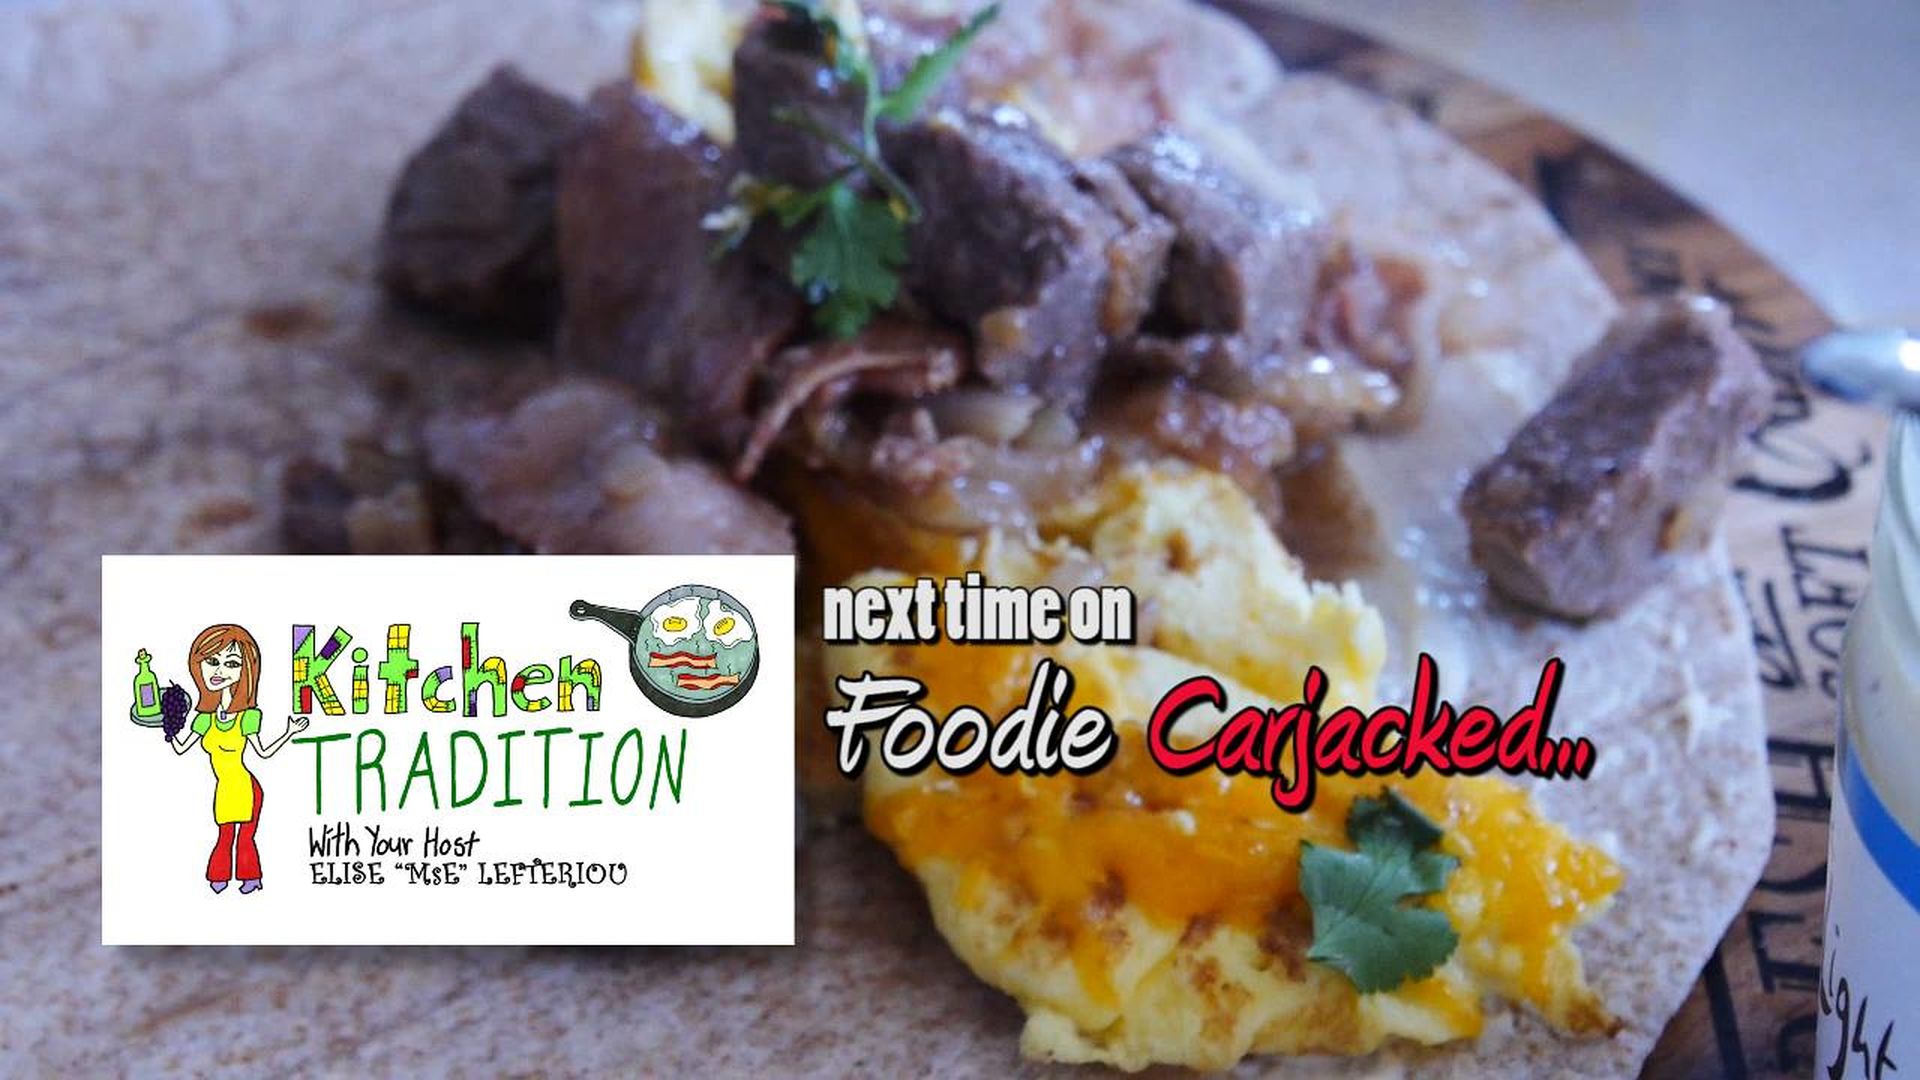 "KITCHEN TRADITION" - Carjack Steak & Eggs